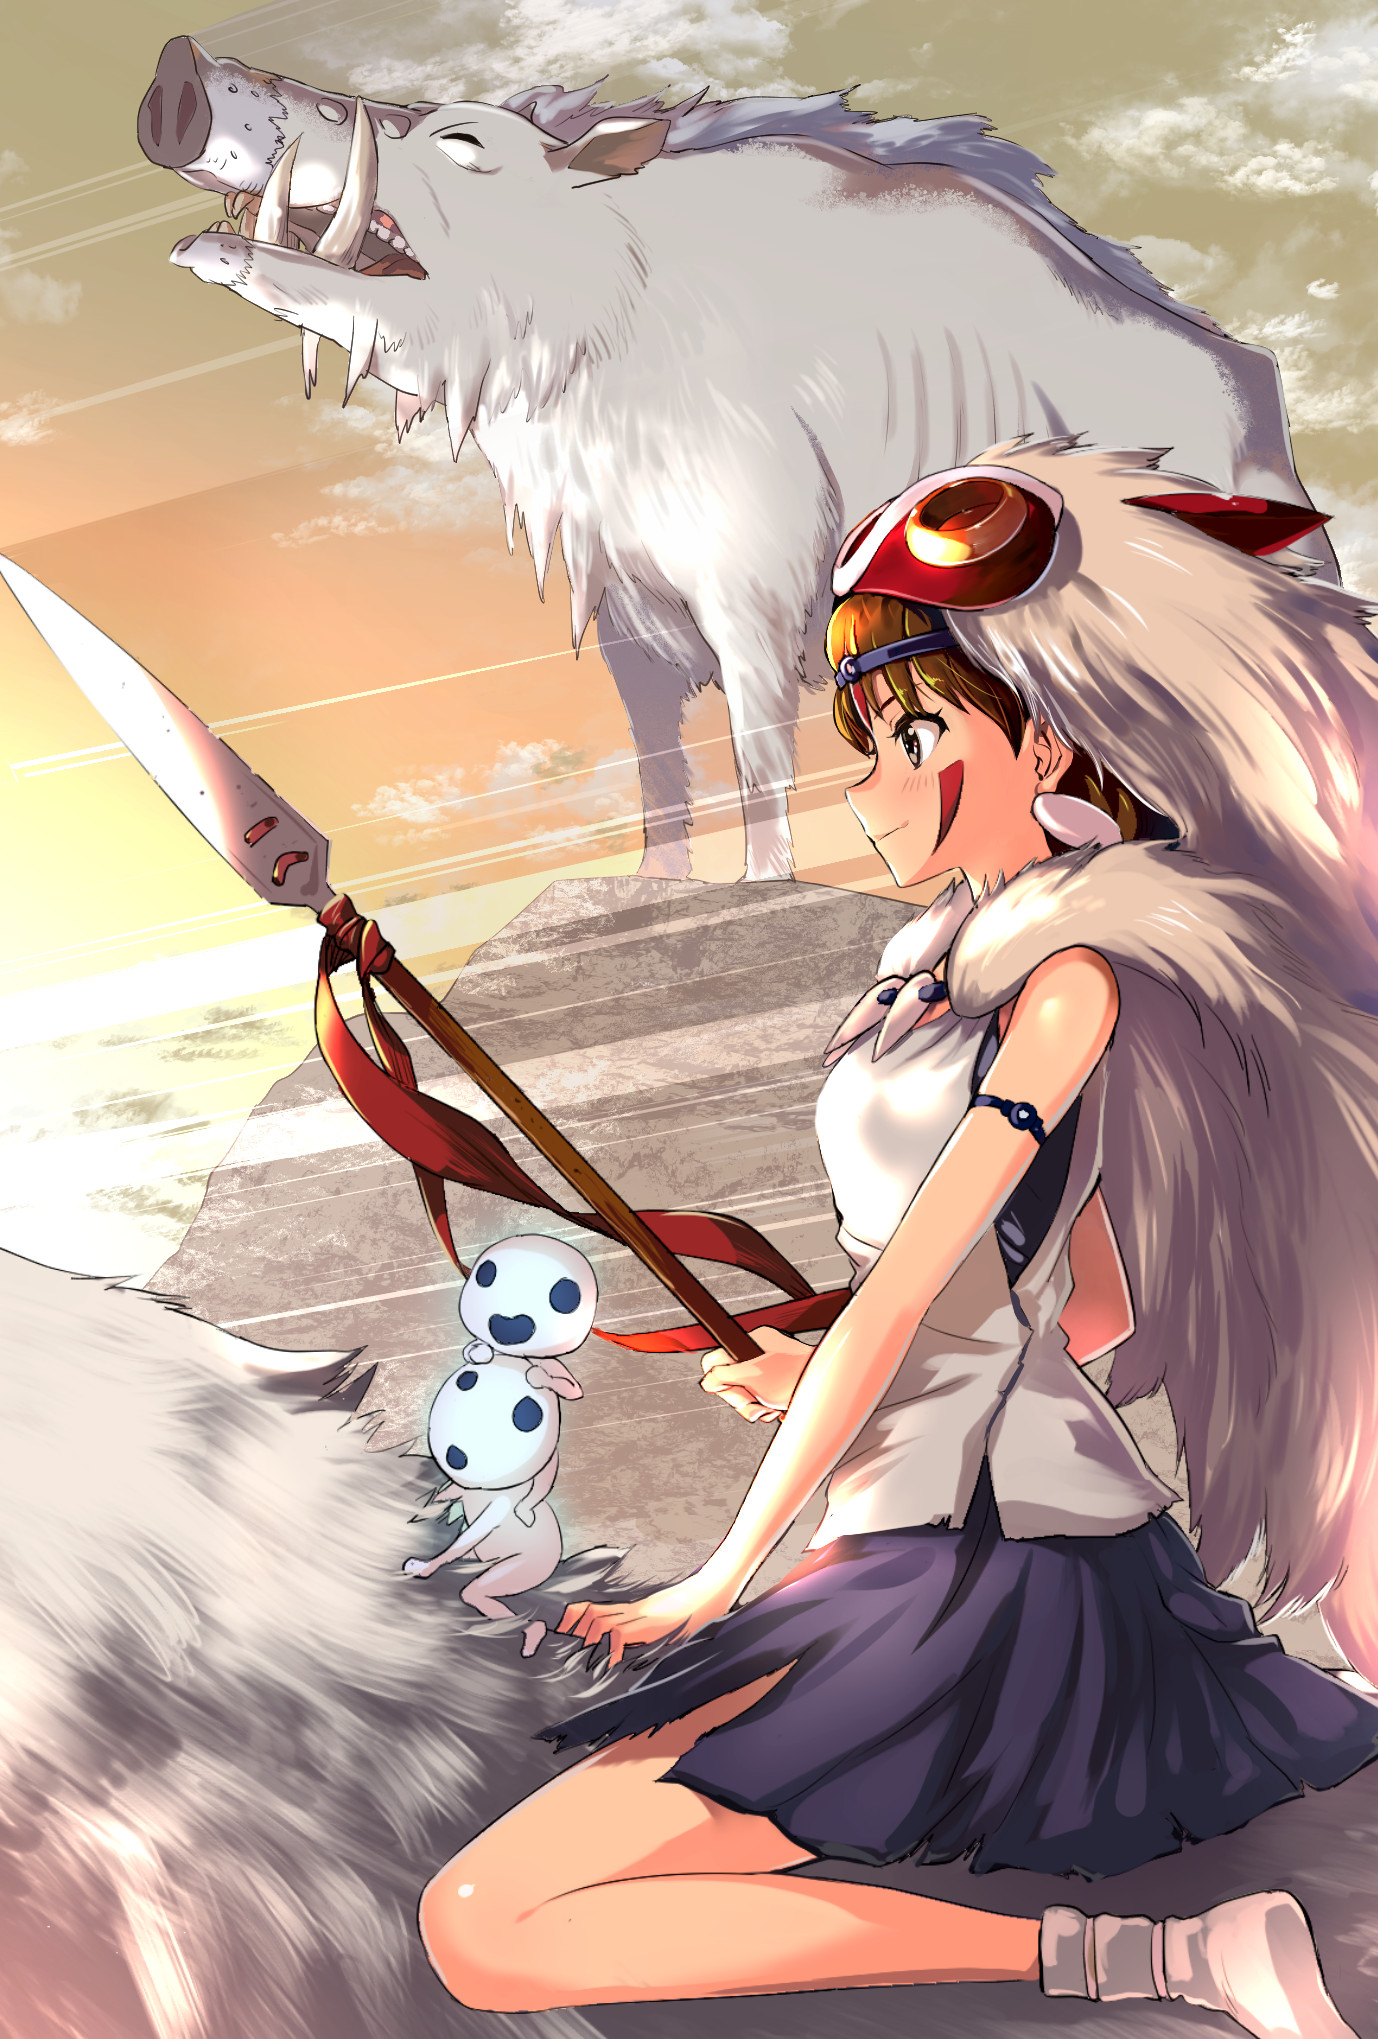 Anime 1378x2039 anime anime girls Wild Boar spear Princess Mononoke